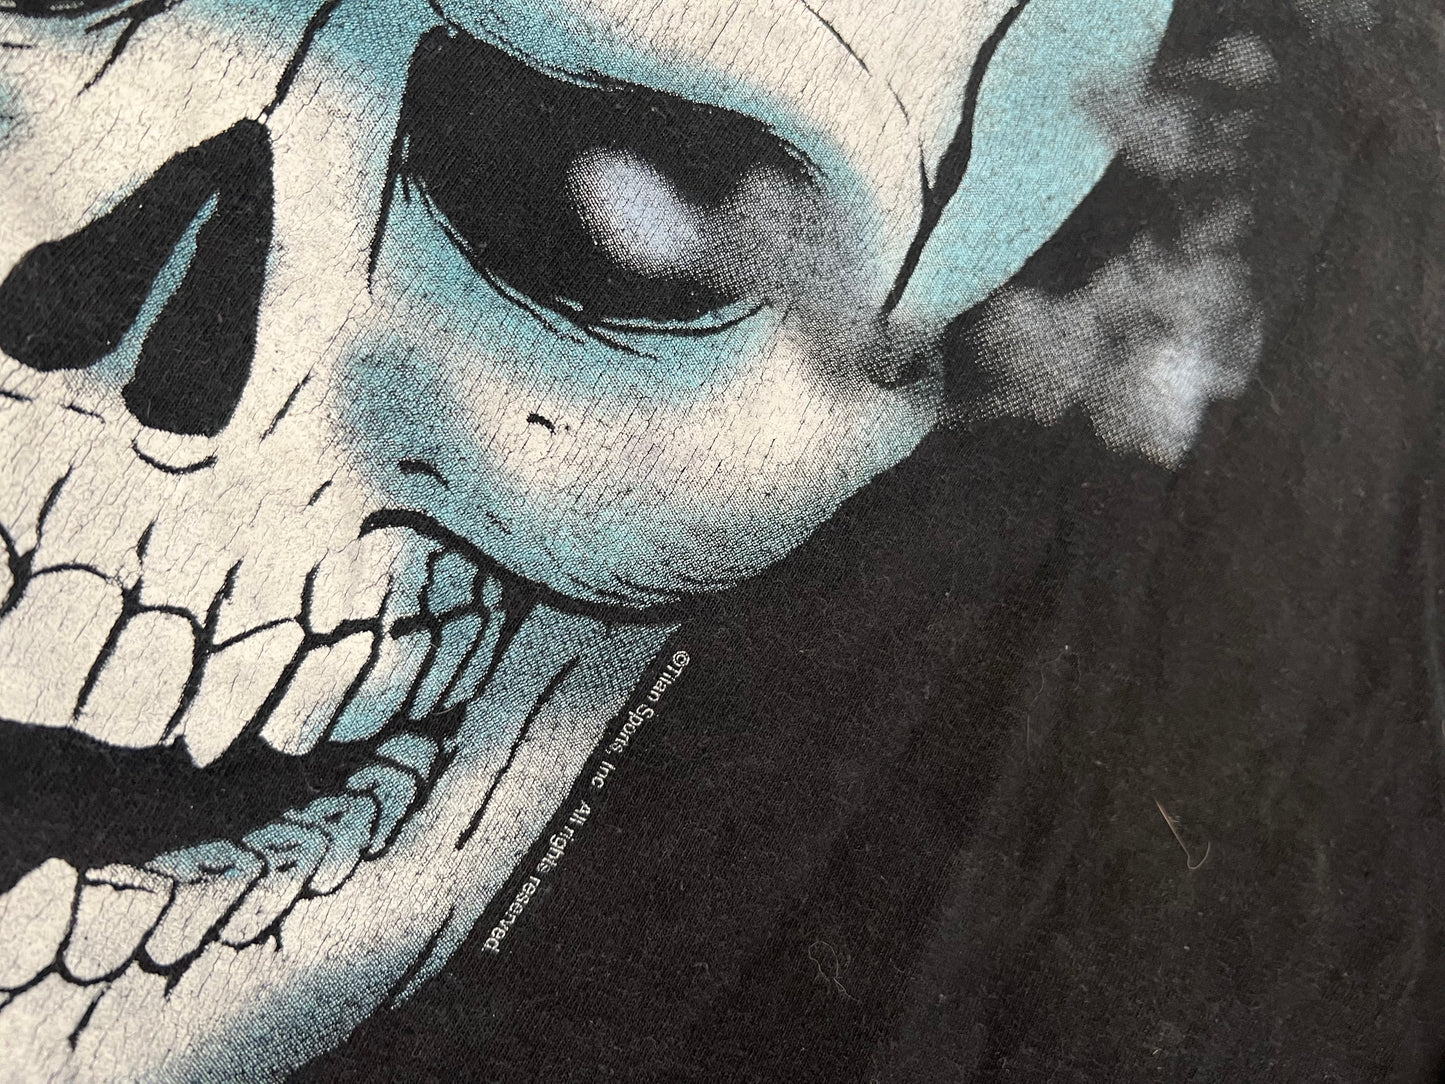 1997 WWF “Stone Cold” Steve Austin Smoking Skull “Austin 3:16” shirt